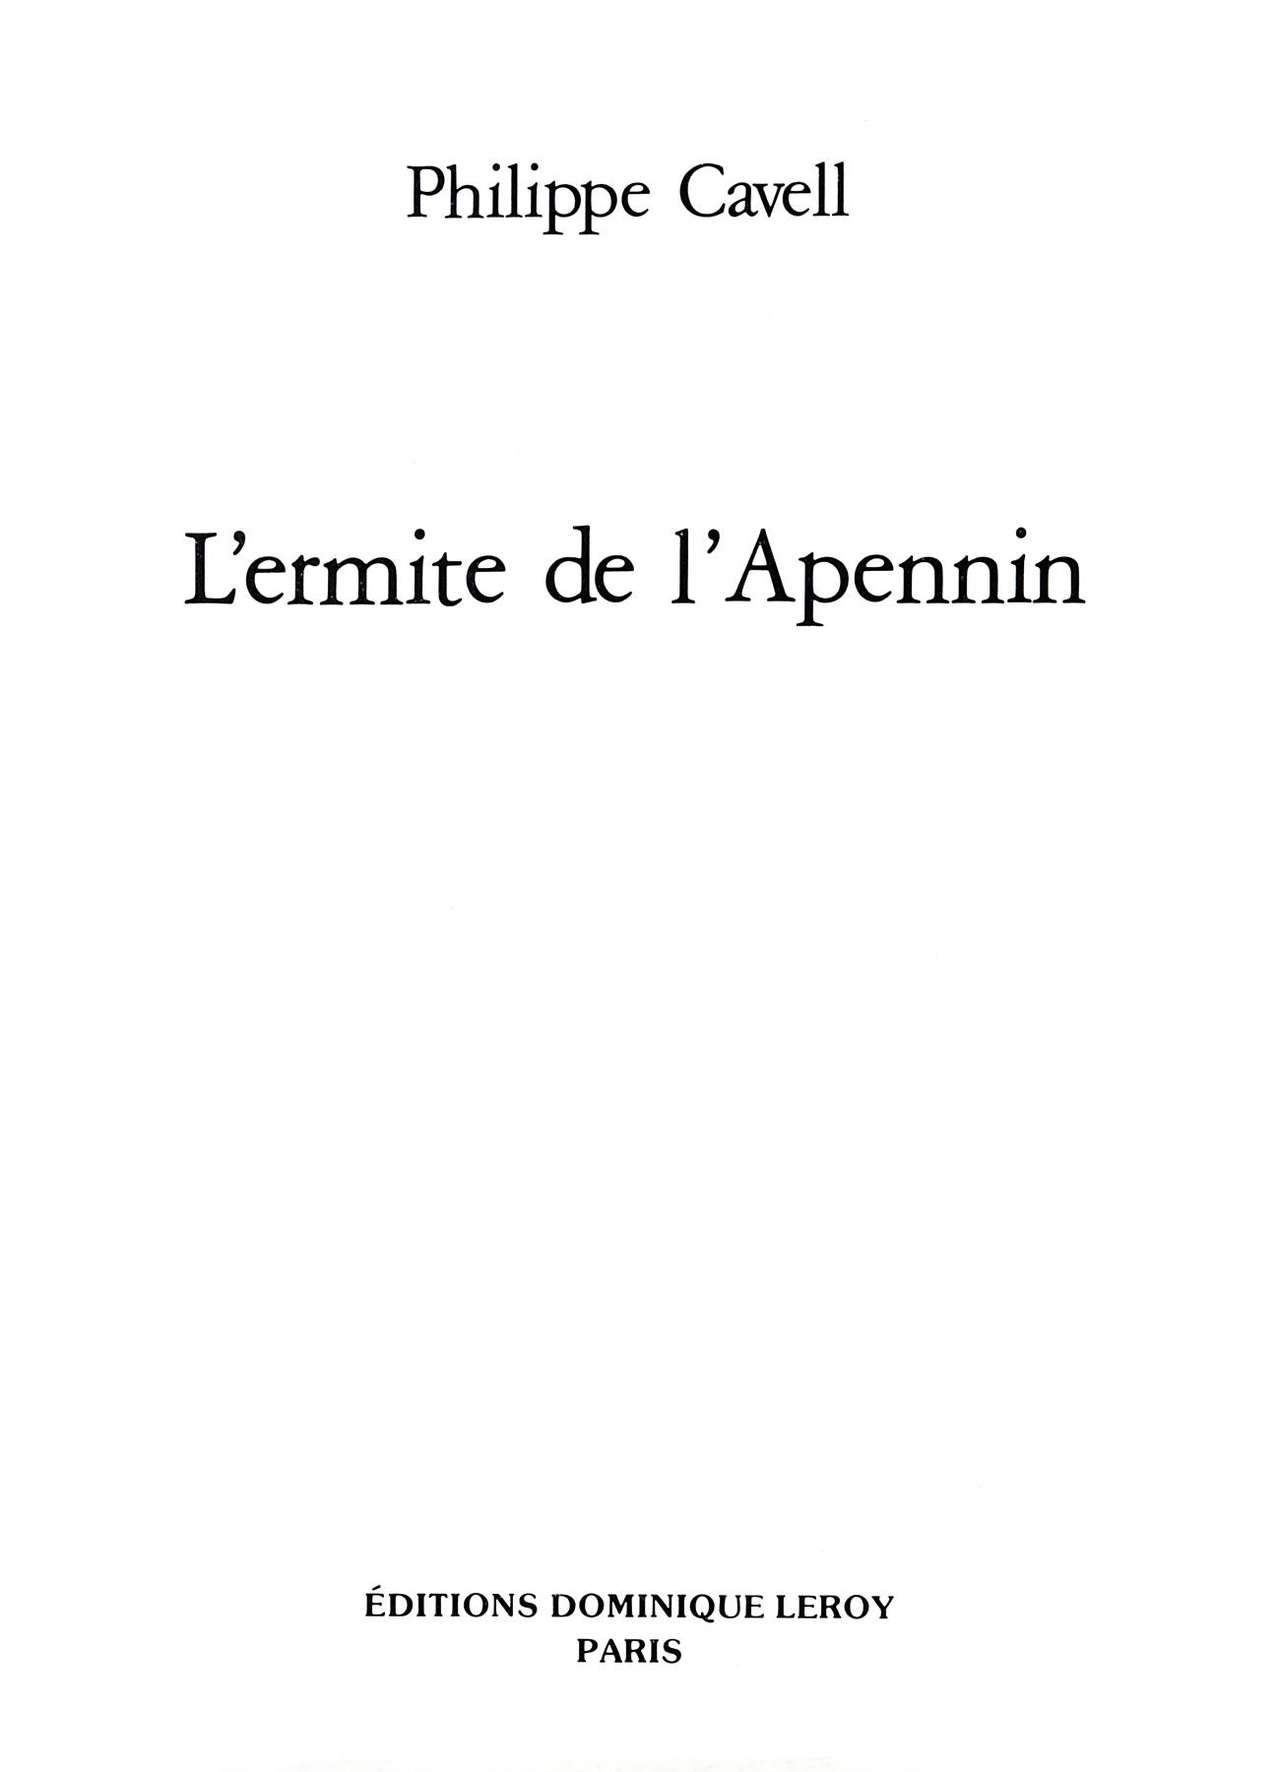 Juliette de Sade 2 - Lermite de lApennin numero d'image 5